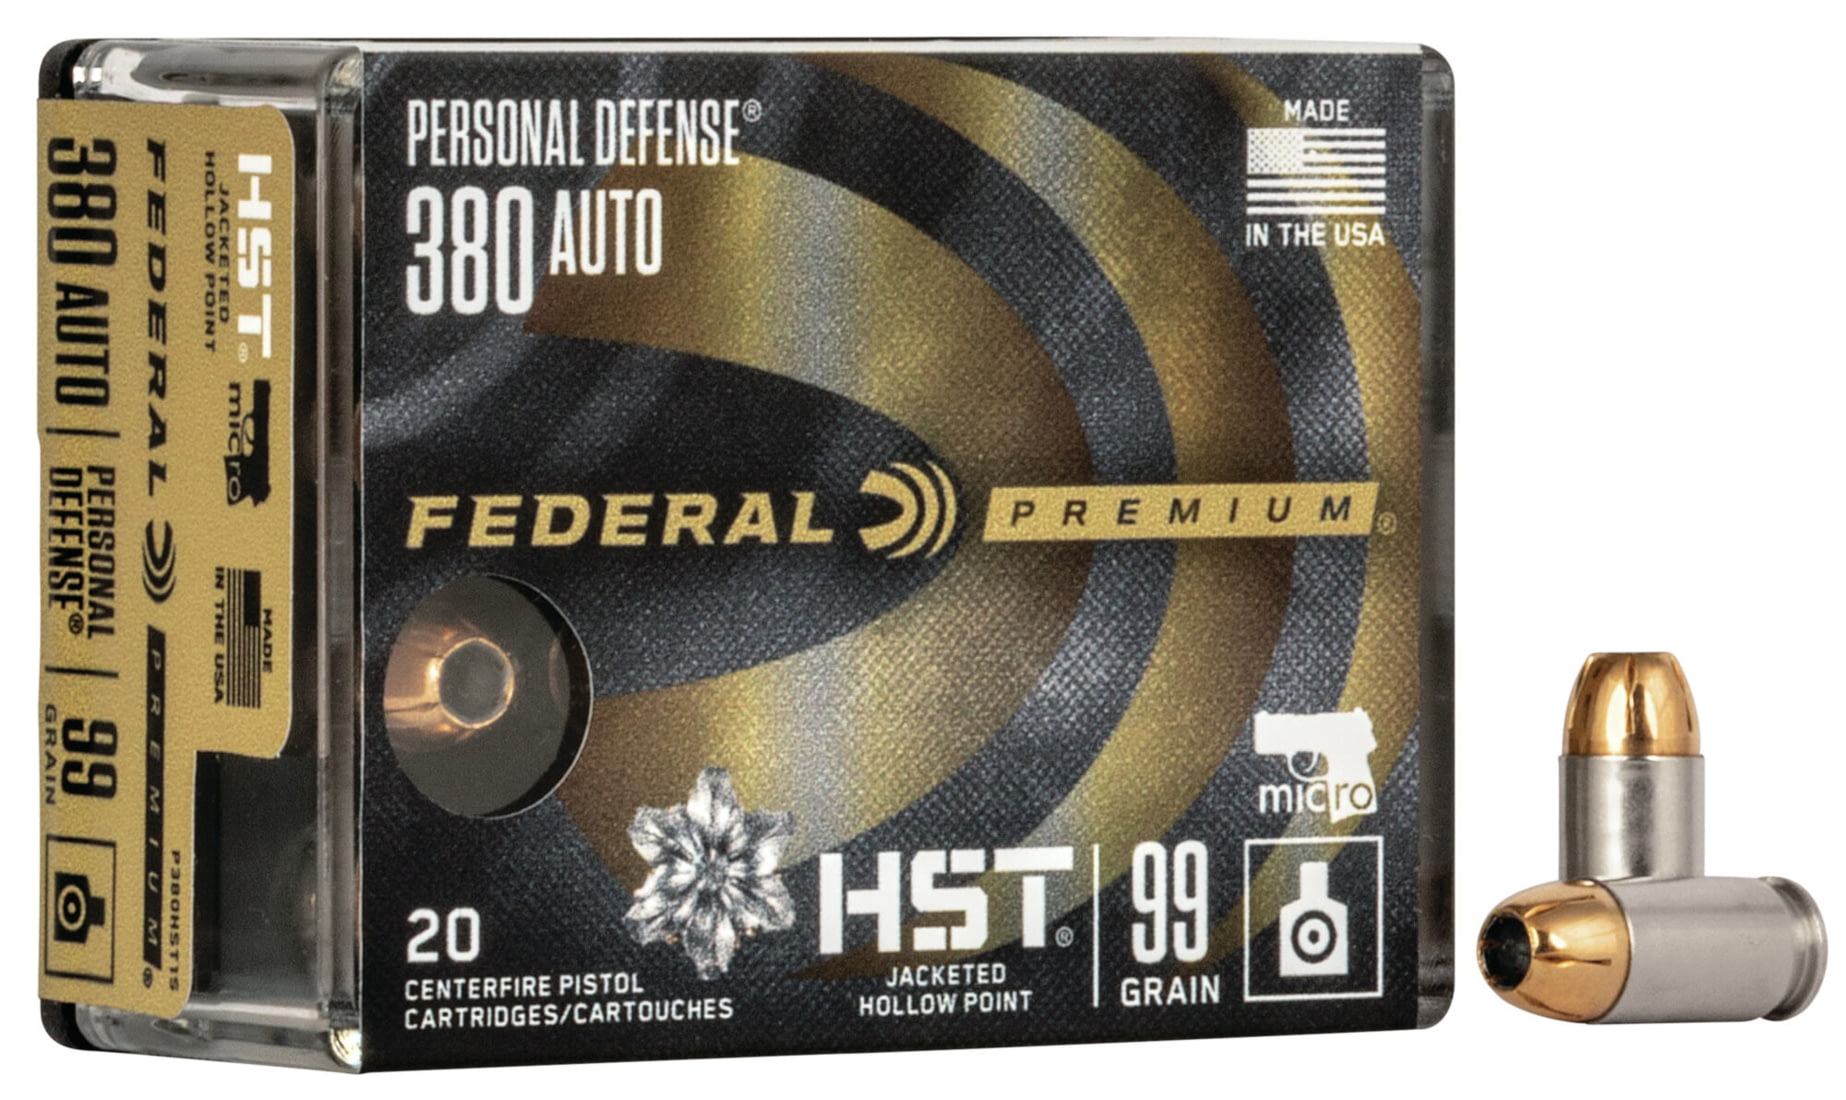 Federal Premium Centerfire Handgun Ammunition .380 ACP 99 grain HST Jacketed Hollow Point Centerfire Pistol Ammunition